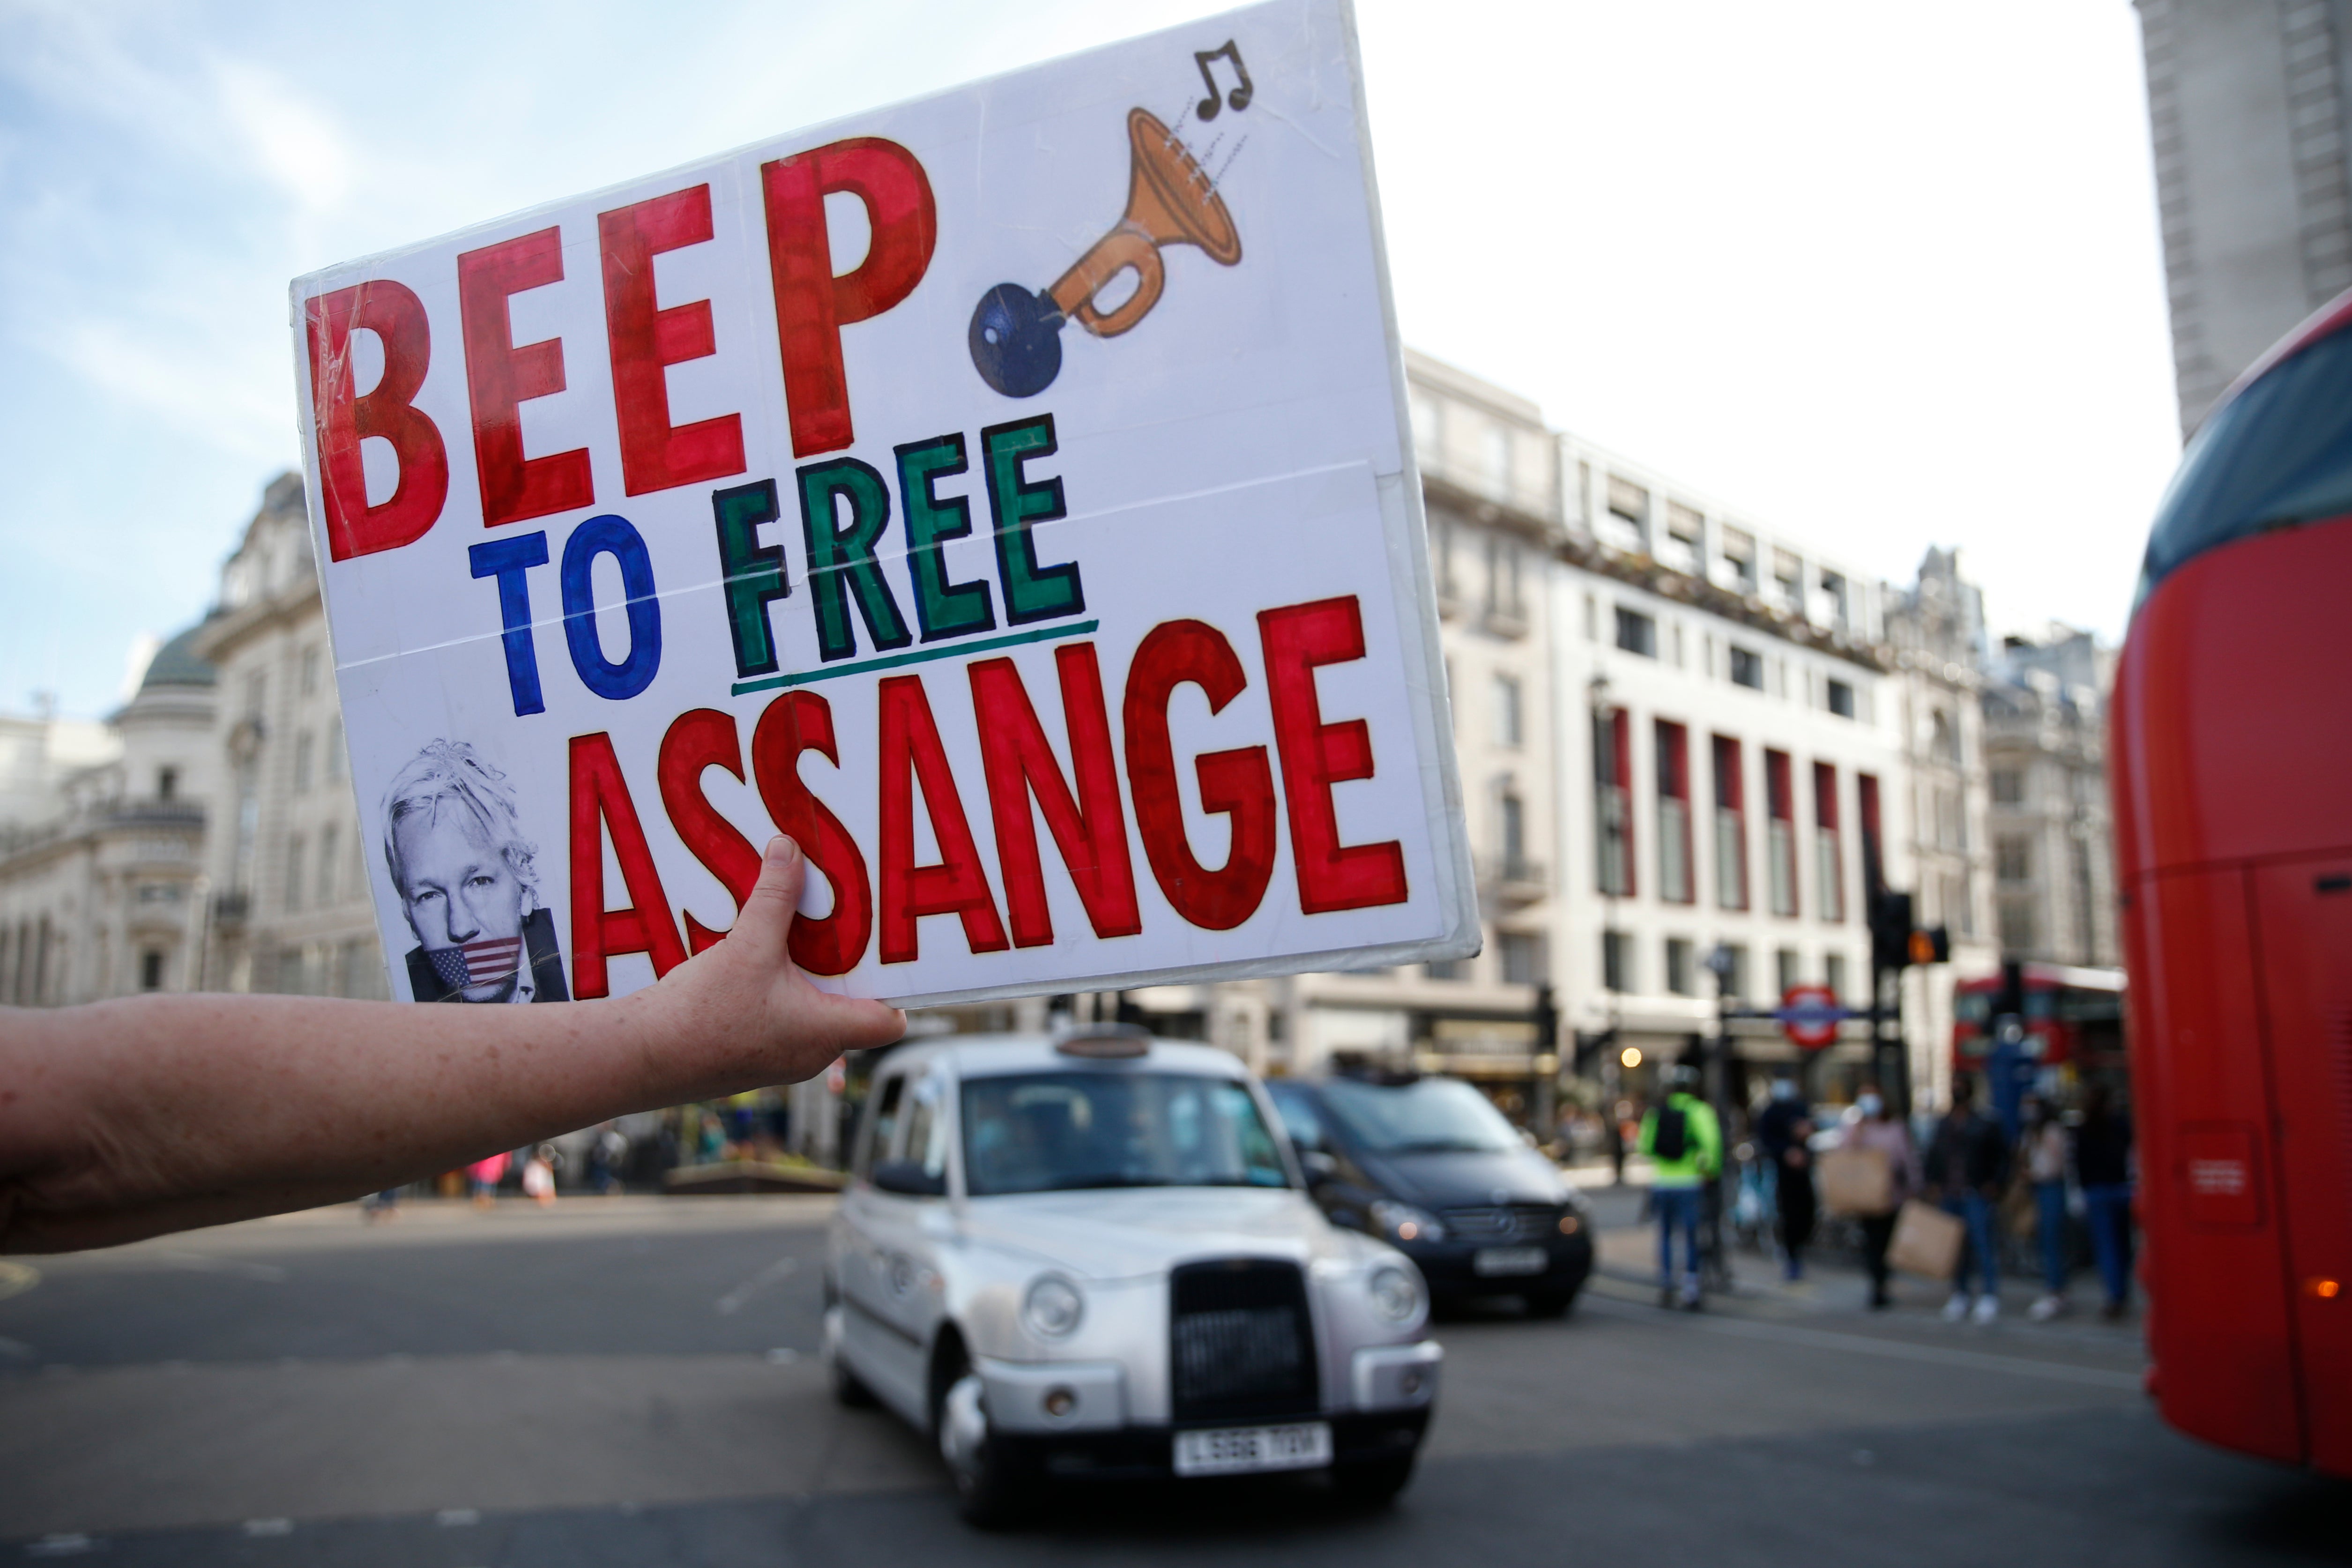 Julian Assange has been held in London’s Belmarsh Jail since April 2019